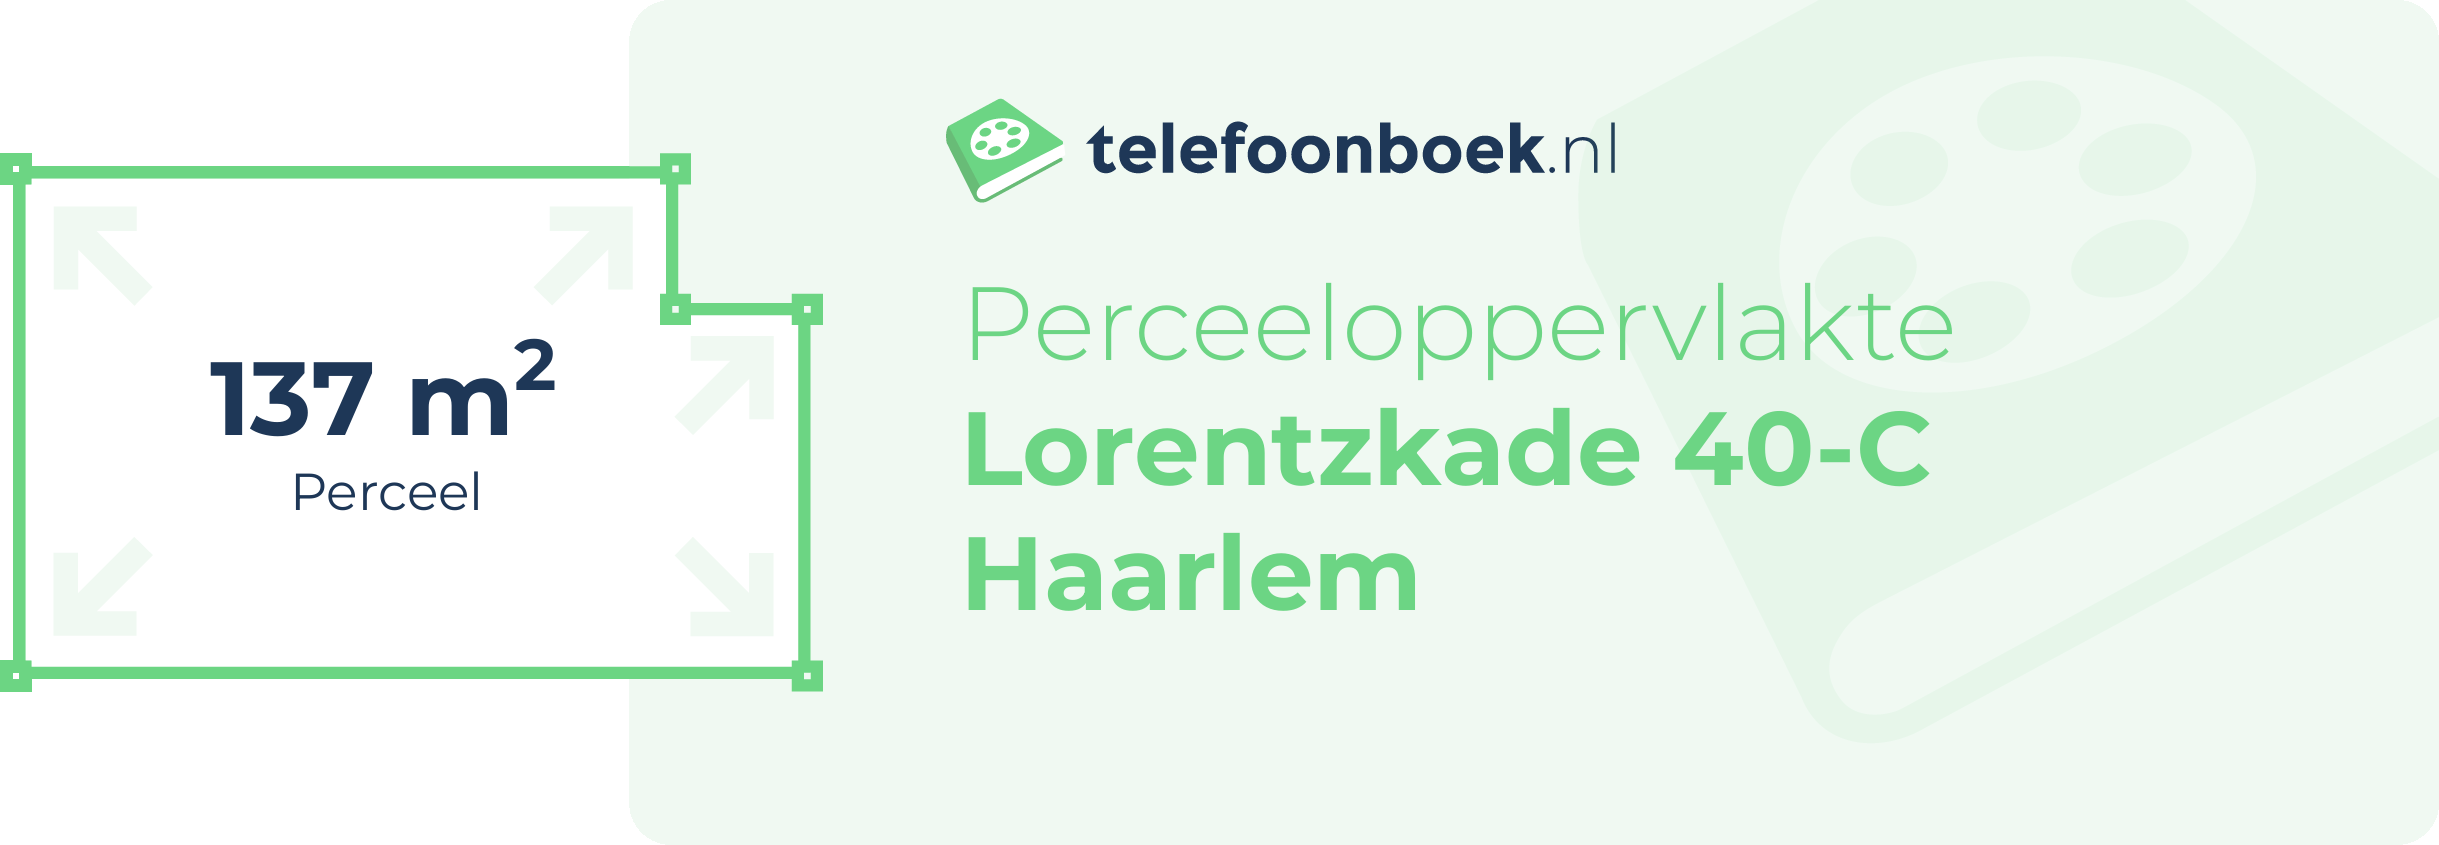 Perceeloppervlakte Lorentzkade 40-C Haarlem